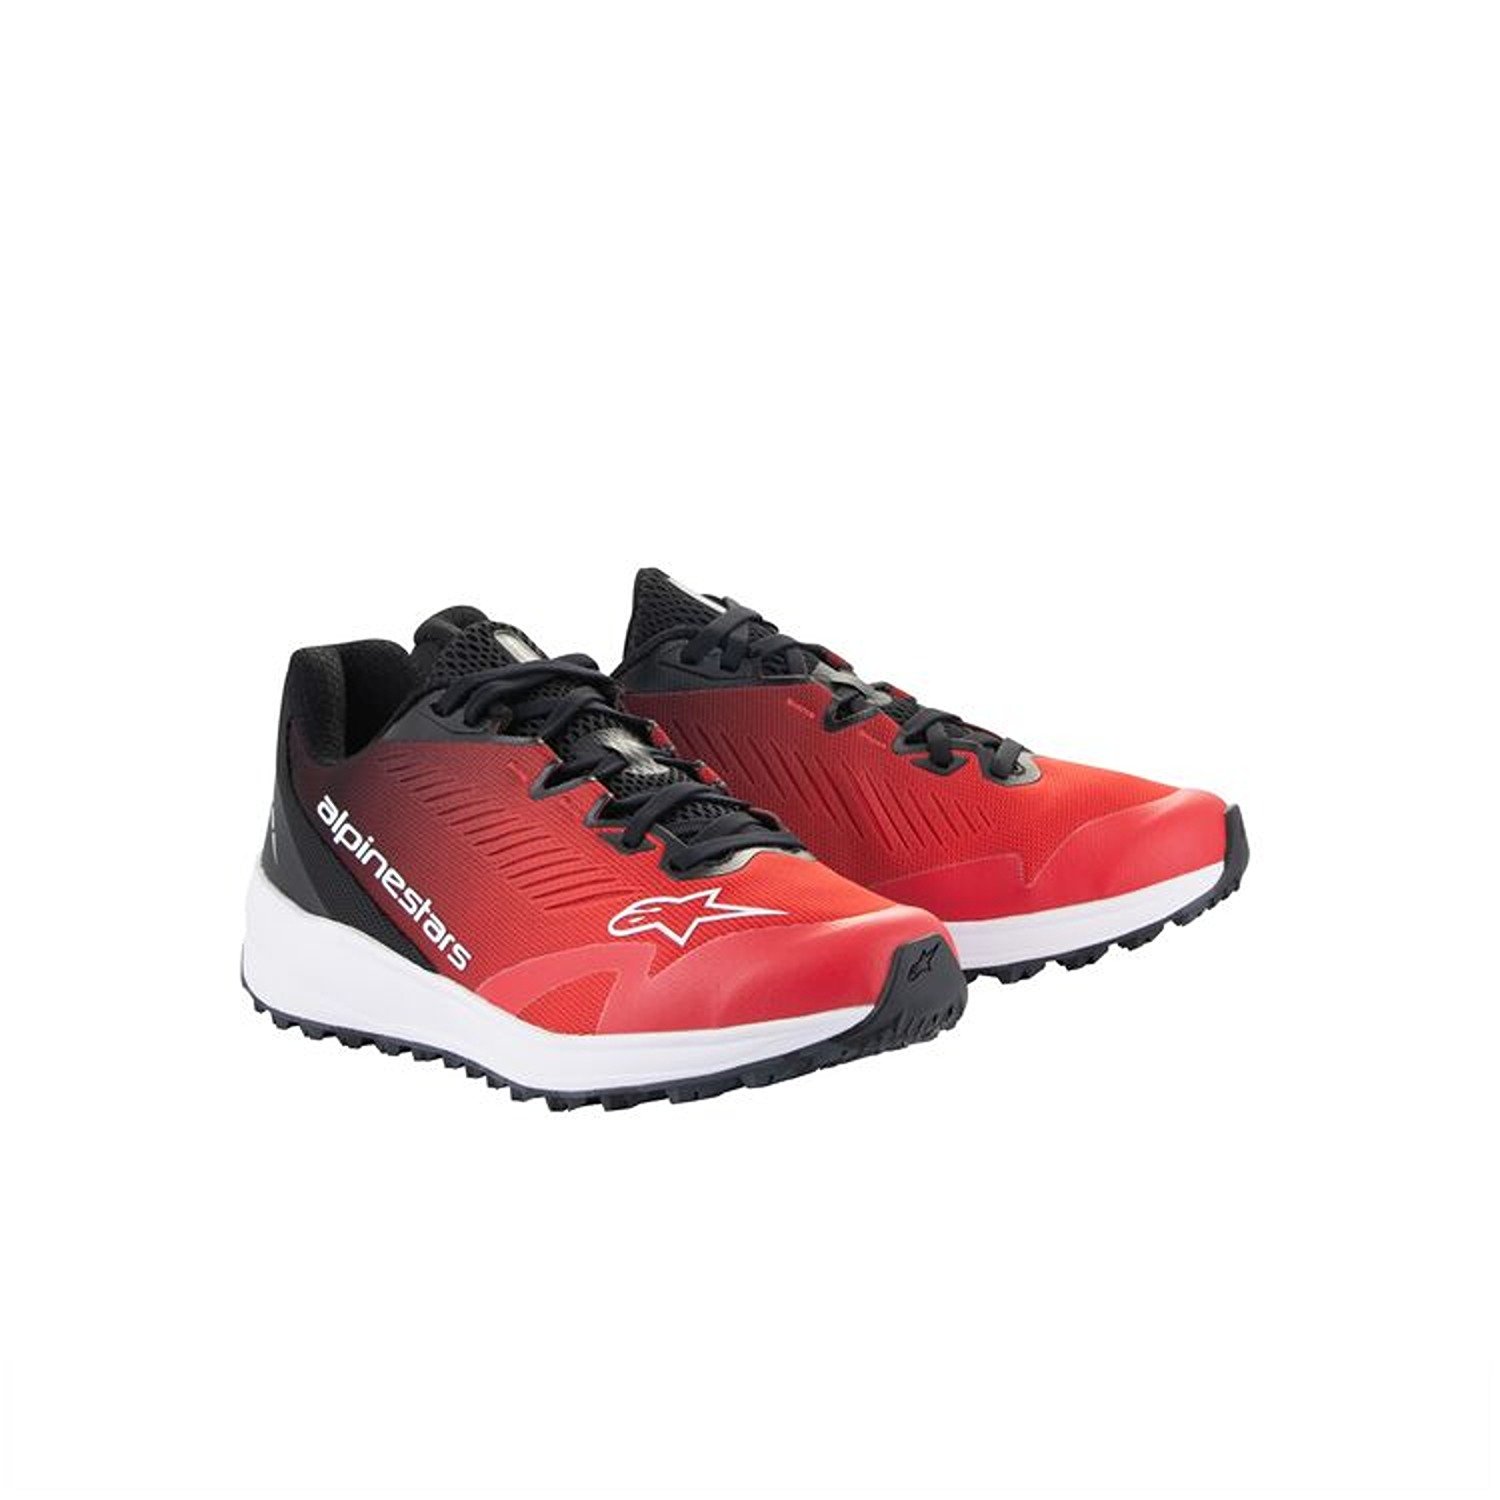 Image of Alpinestars Meta Road V2 Shoes Red Black White Size US 95 ID 8059347353579